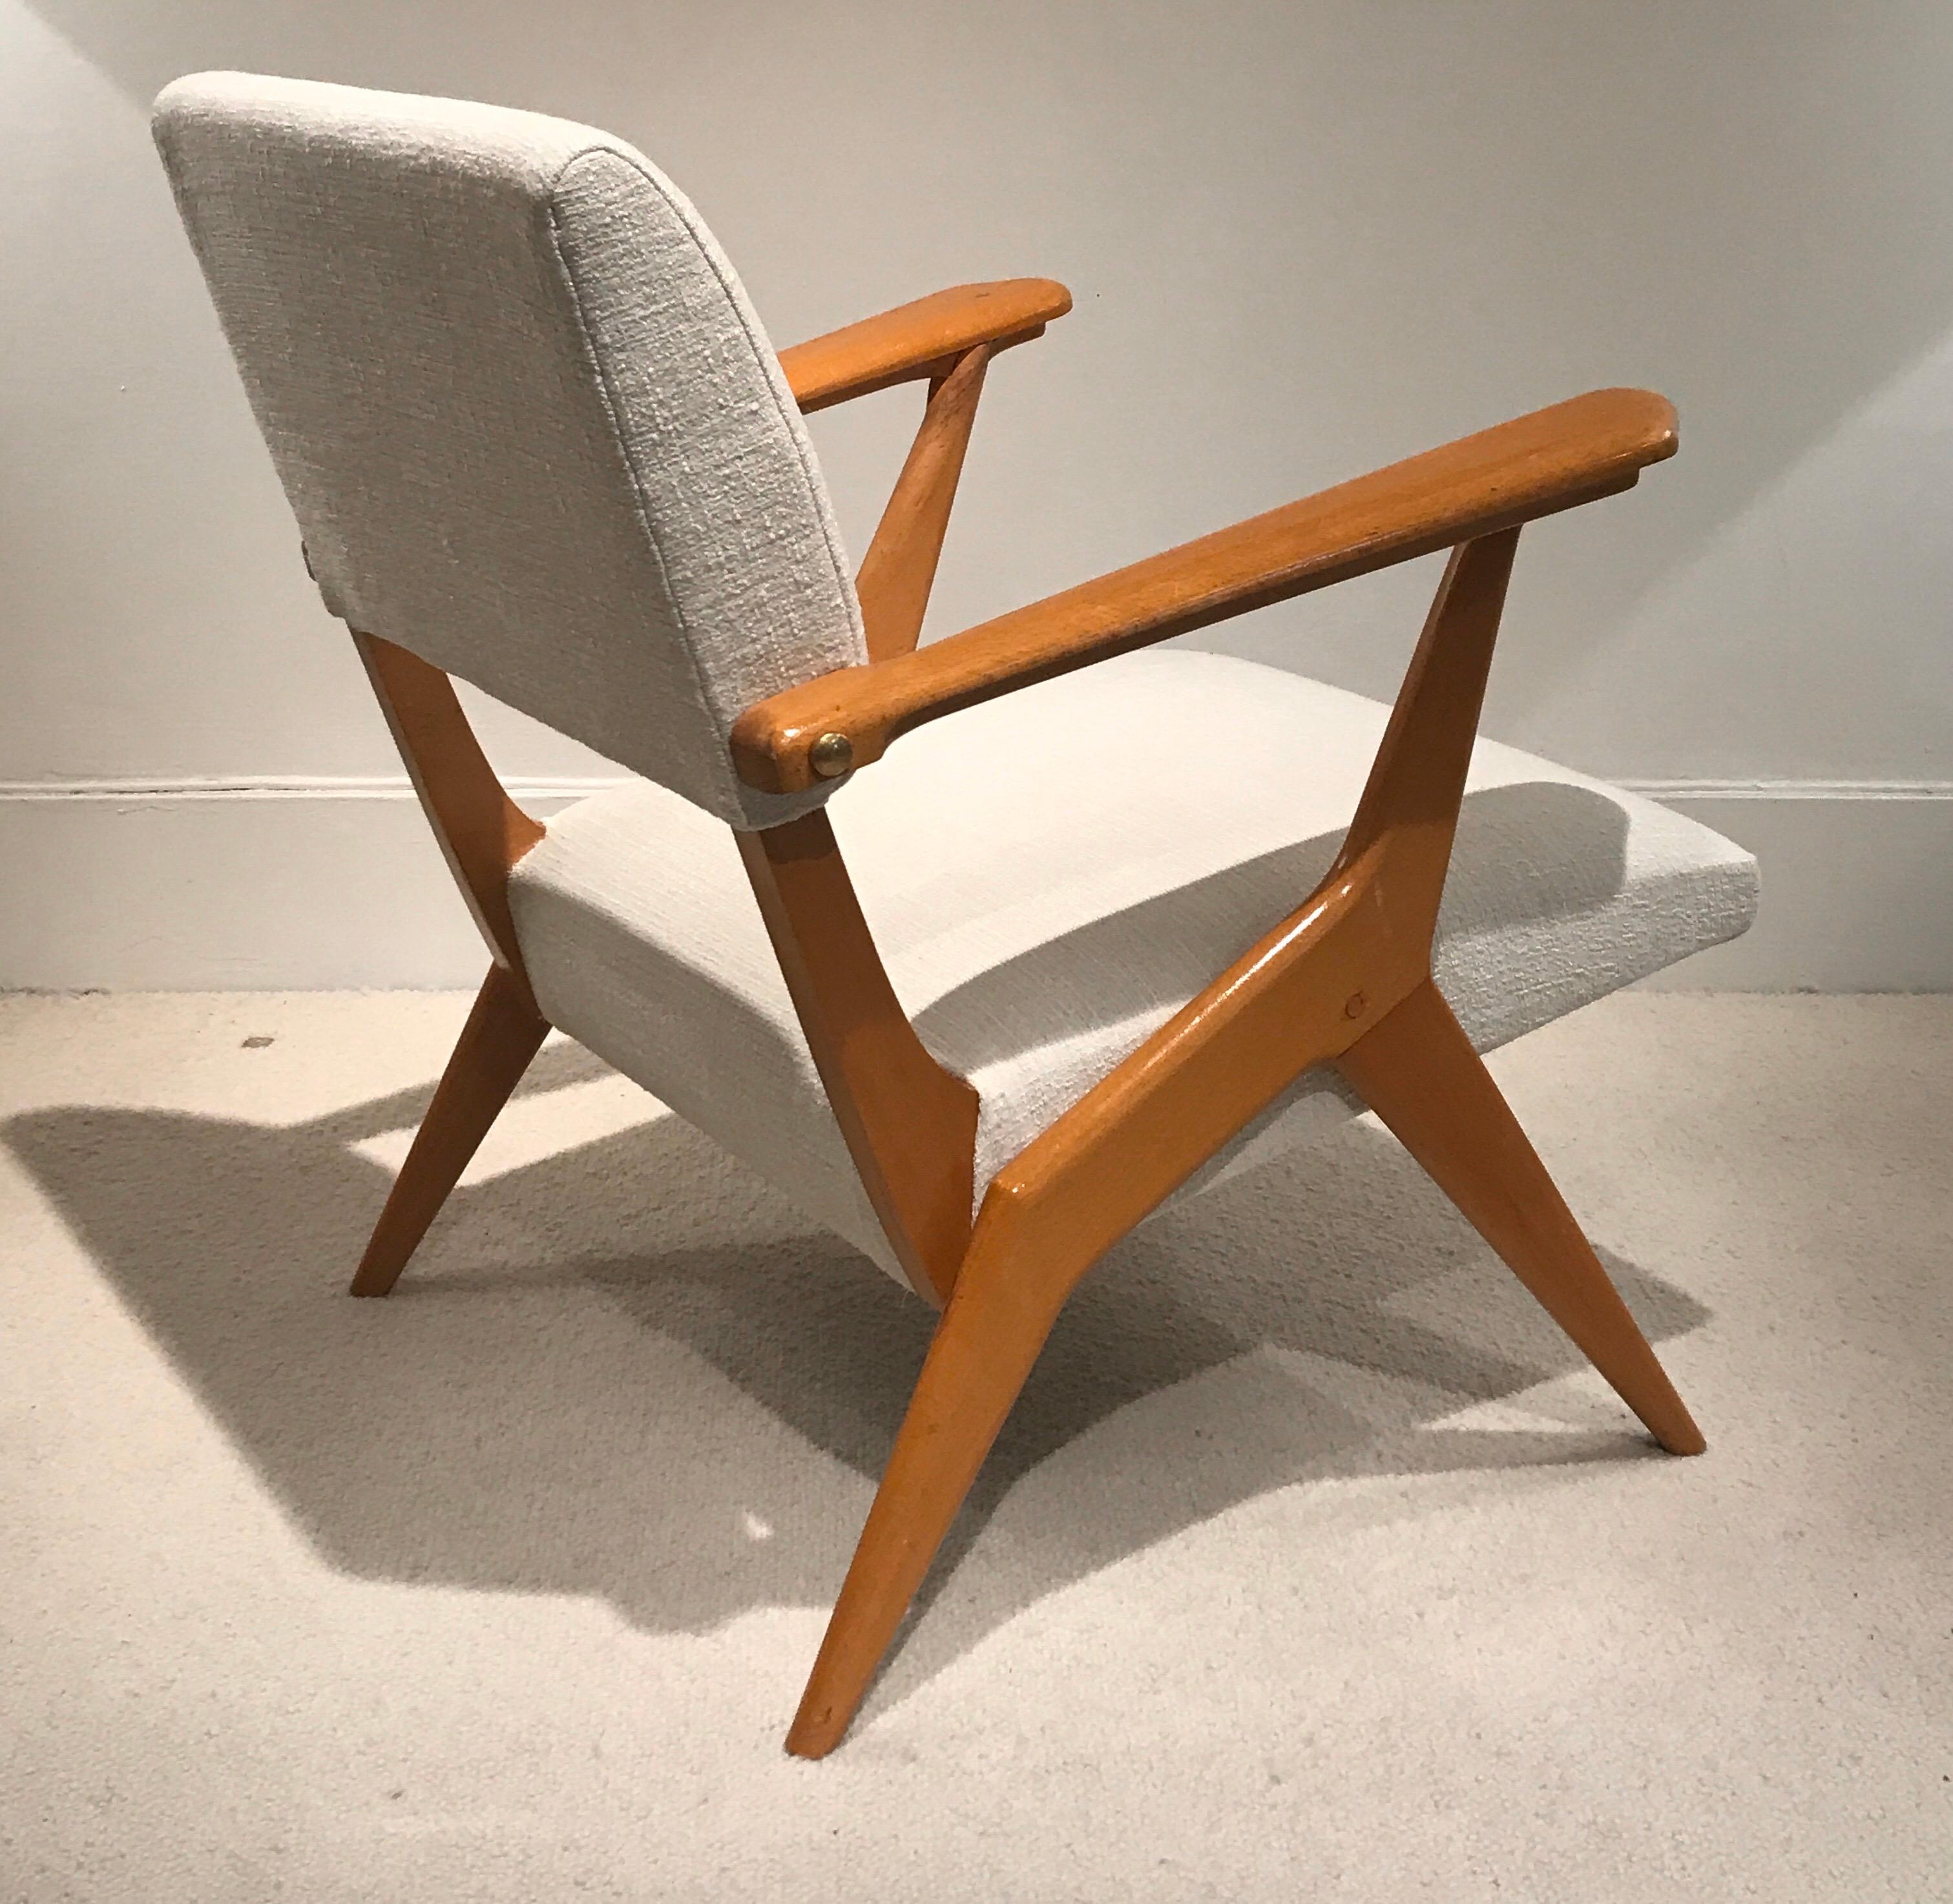 Pair of 1950s Italian armchairs,
New fabric.
         